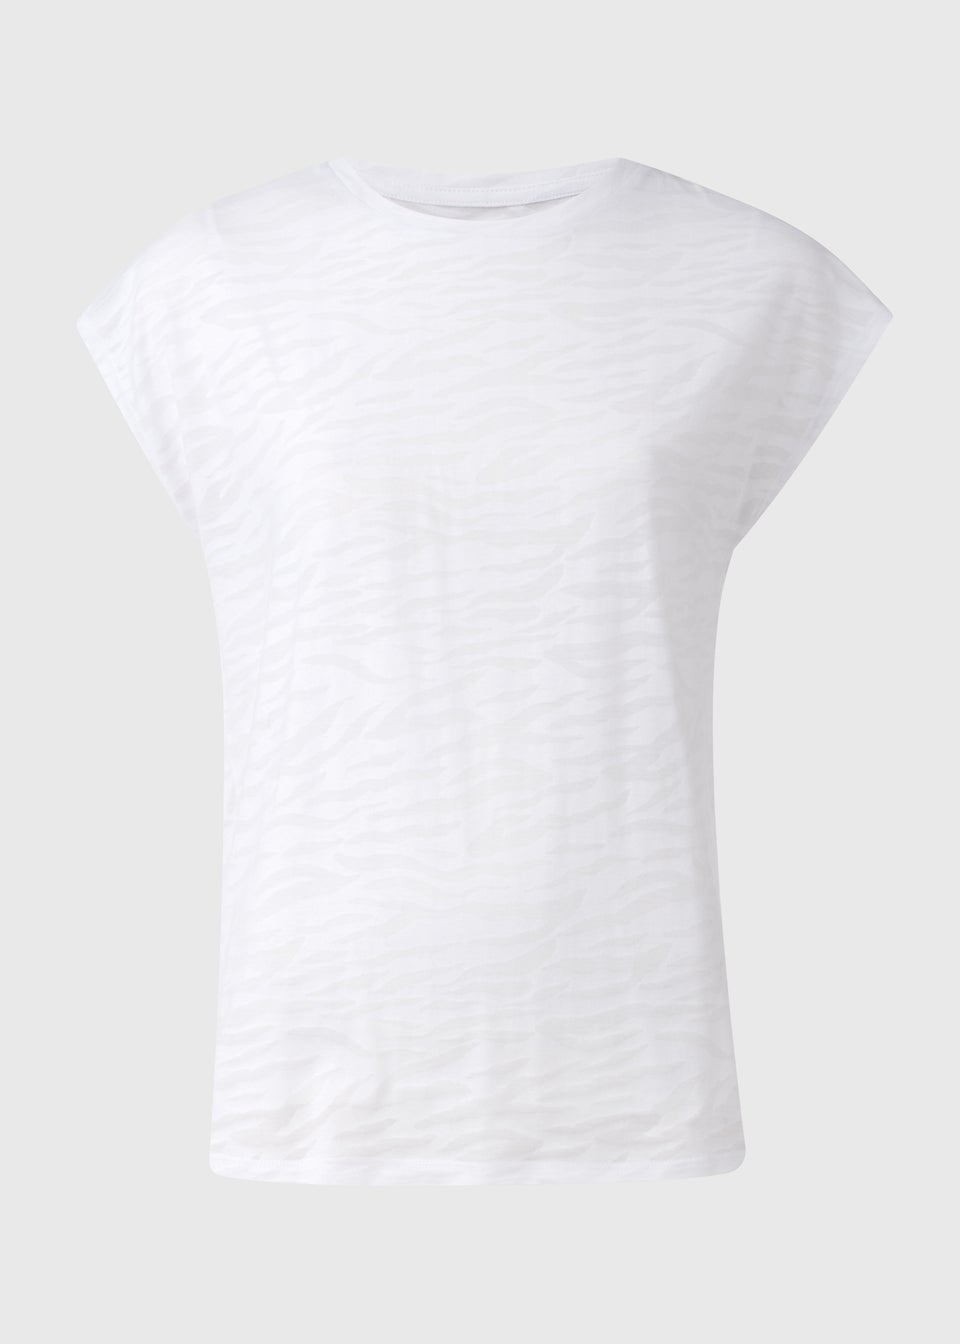 Souluxe White Burnout T-Shirt